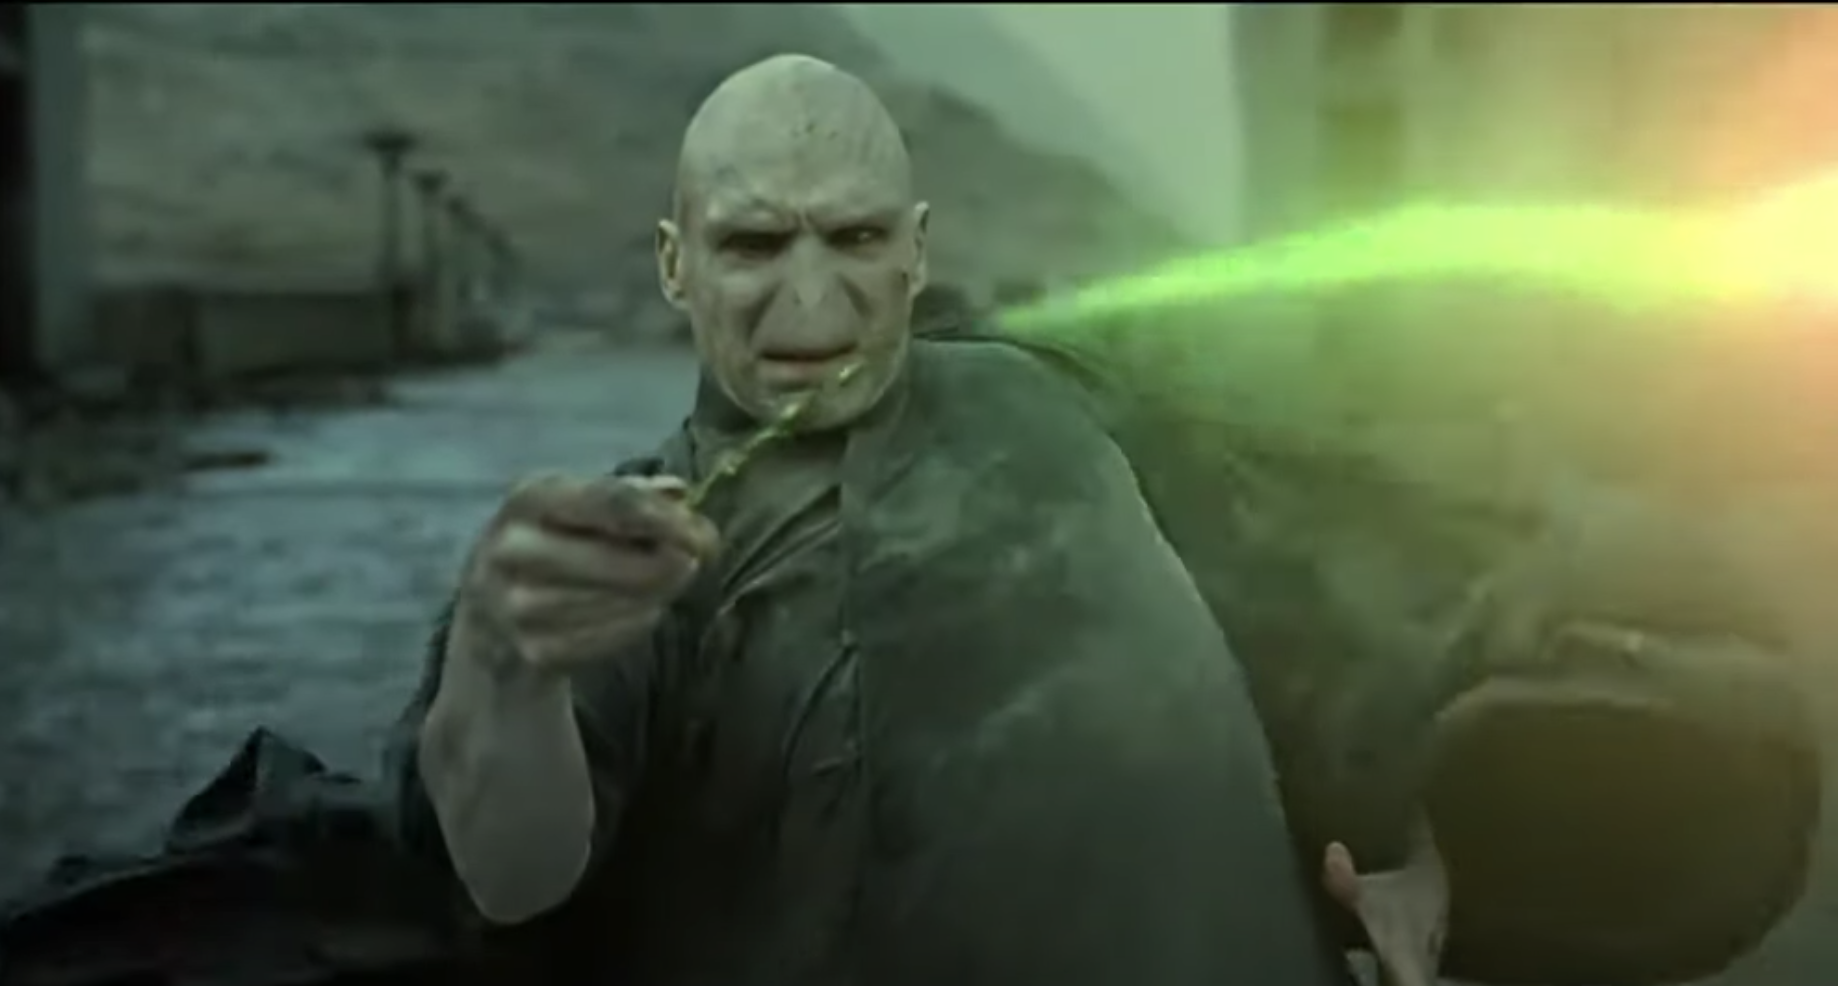 Voldemort battles Harry Potter